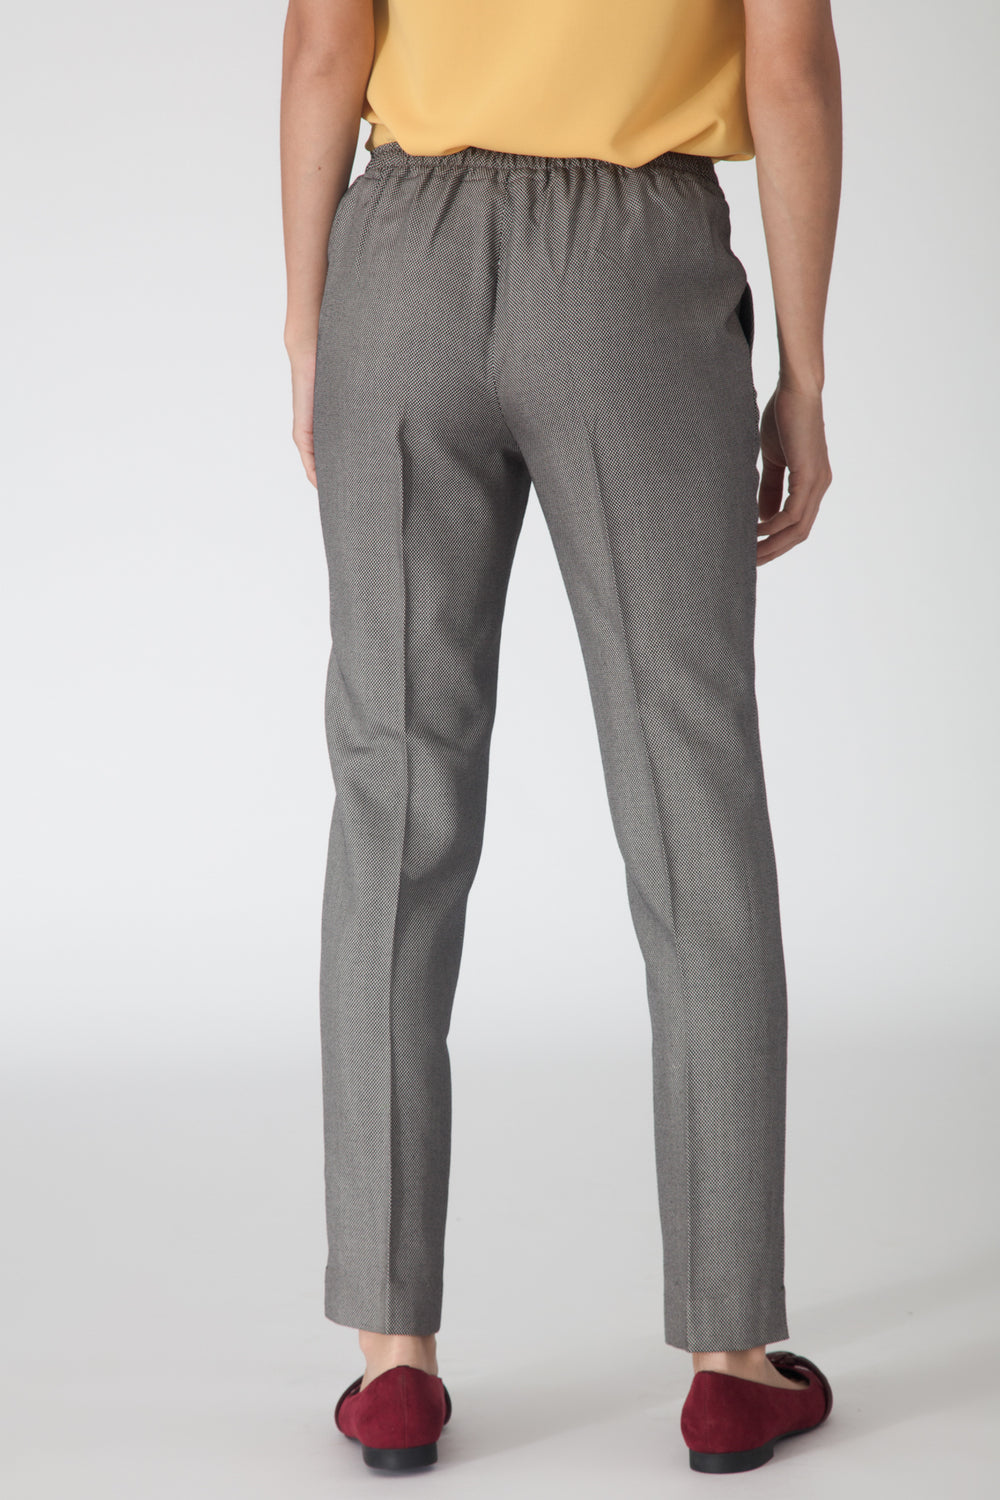 Grey Drawstring Pants